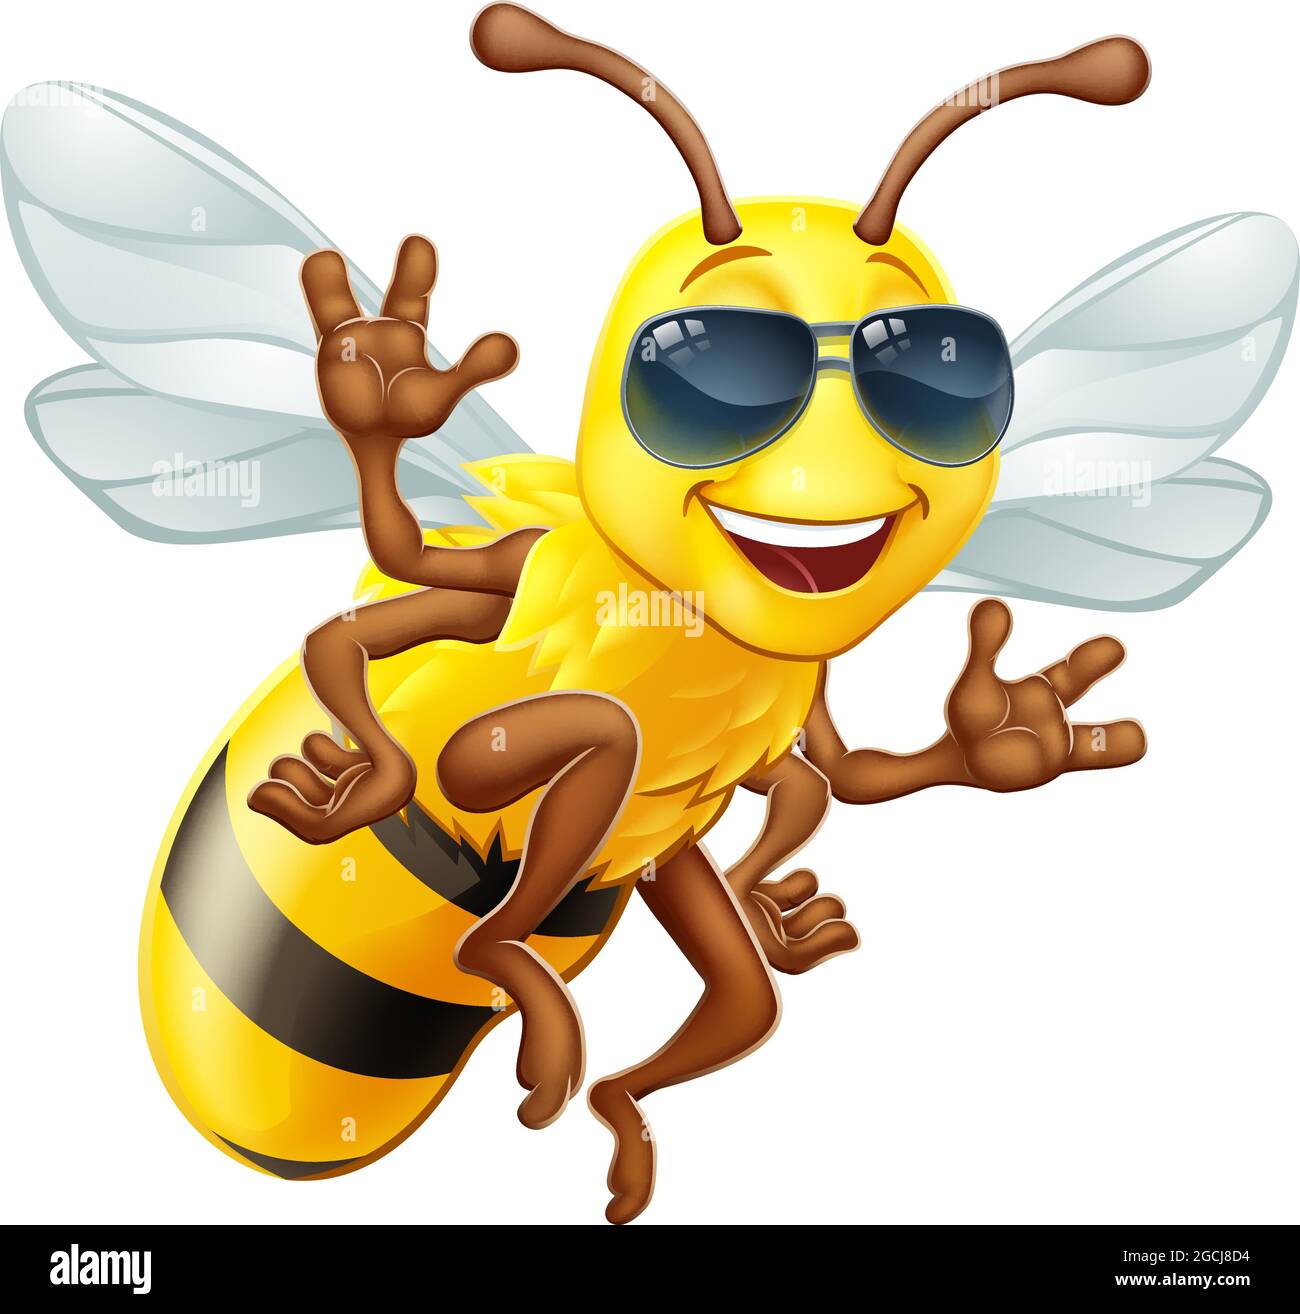 Coole Honey Bumble Bee in Schattierungen Cartoon Charakter Stock Vektor